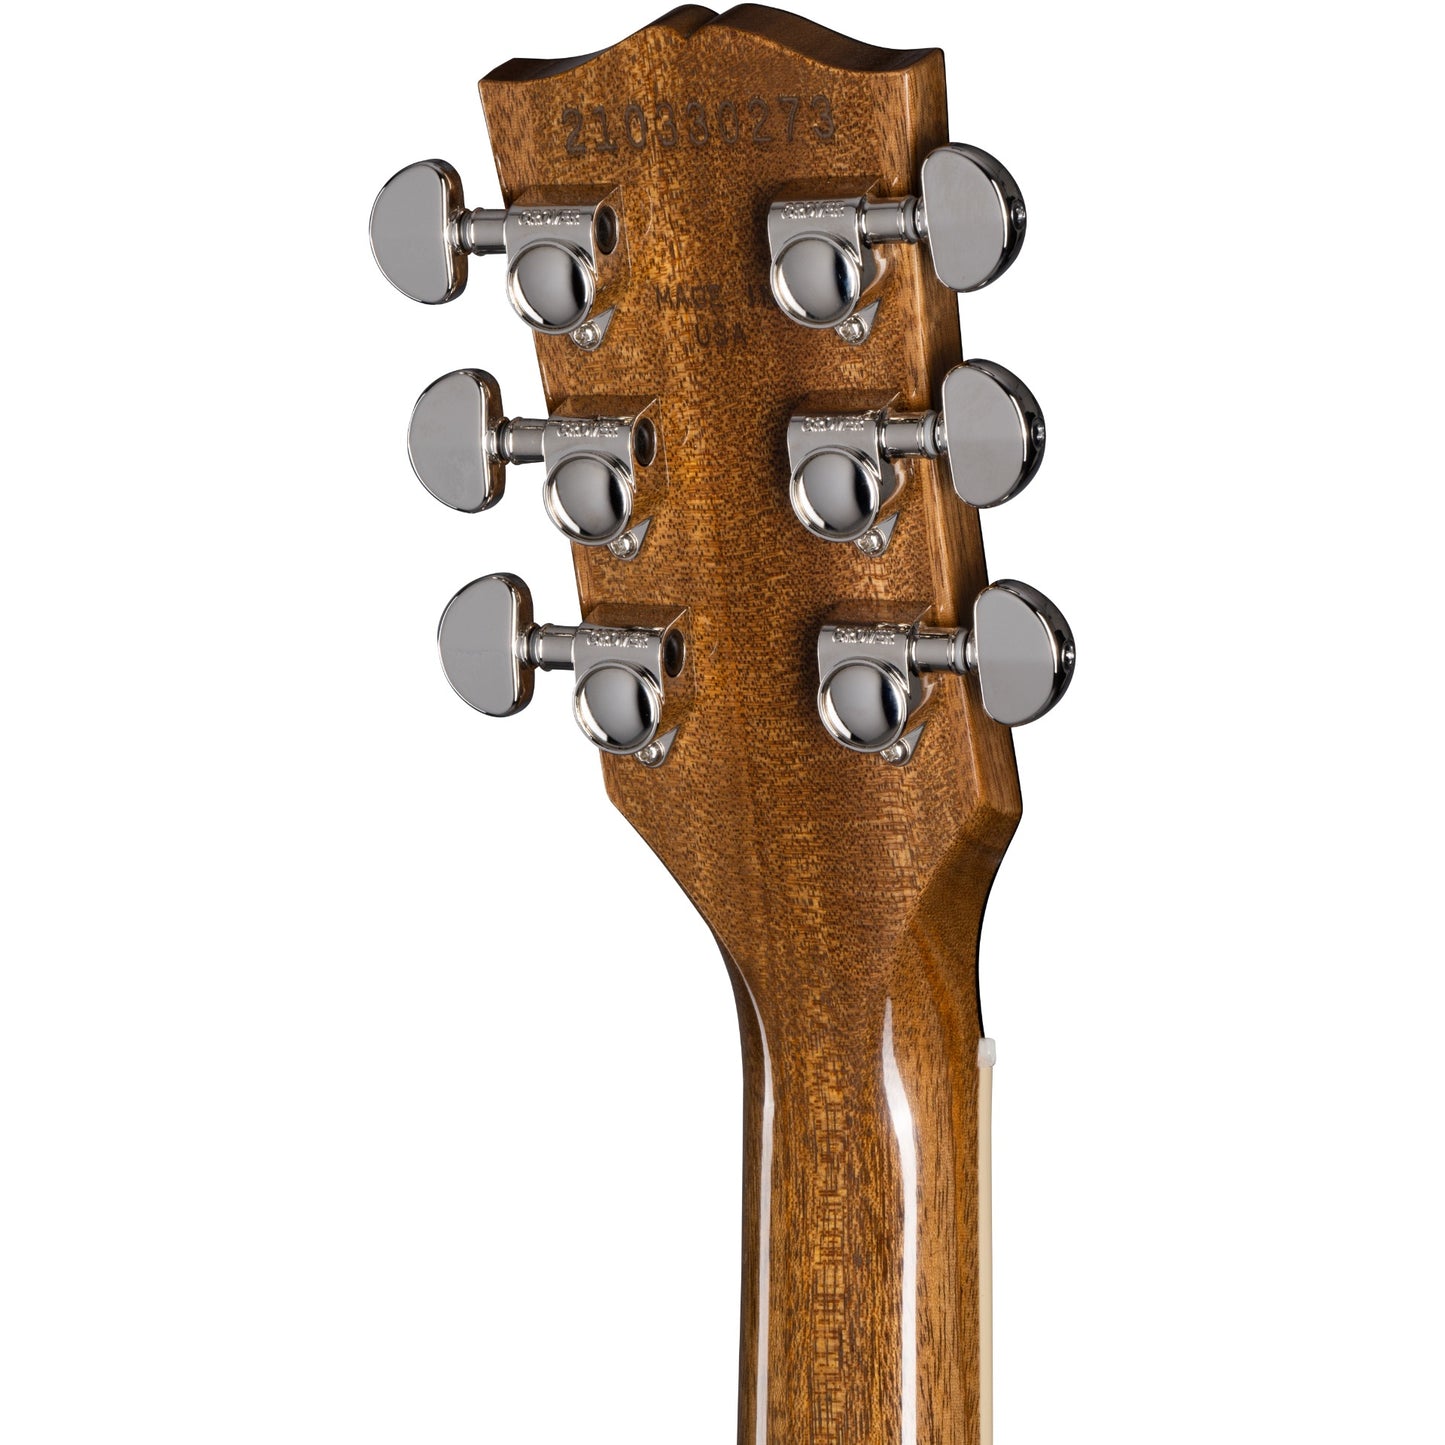 Gibson Les Paul Standard 60s Plain Top Electric Guitar - Classic White Top